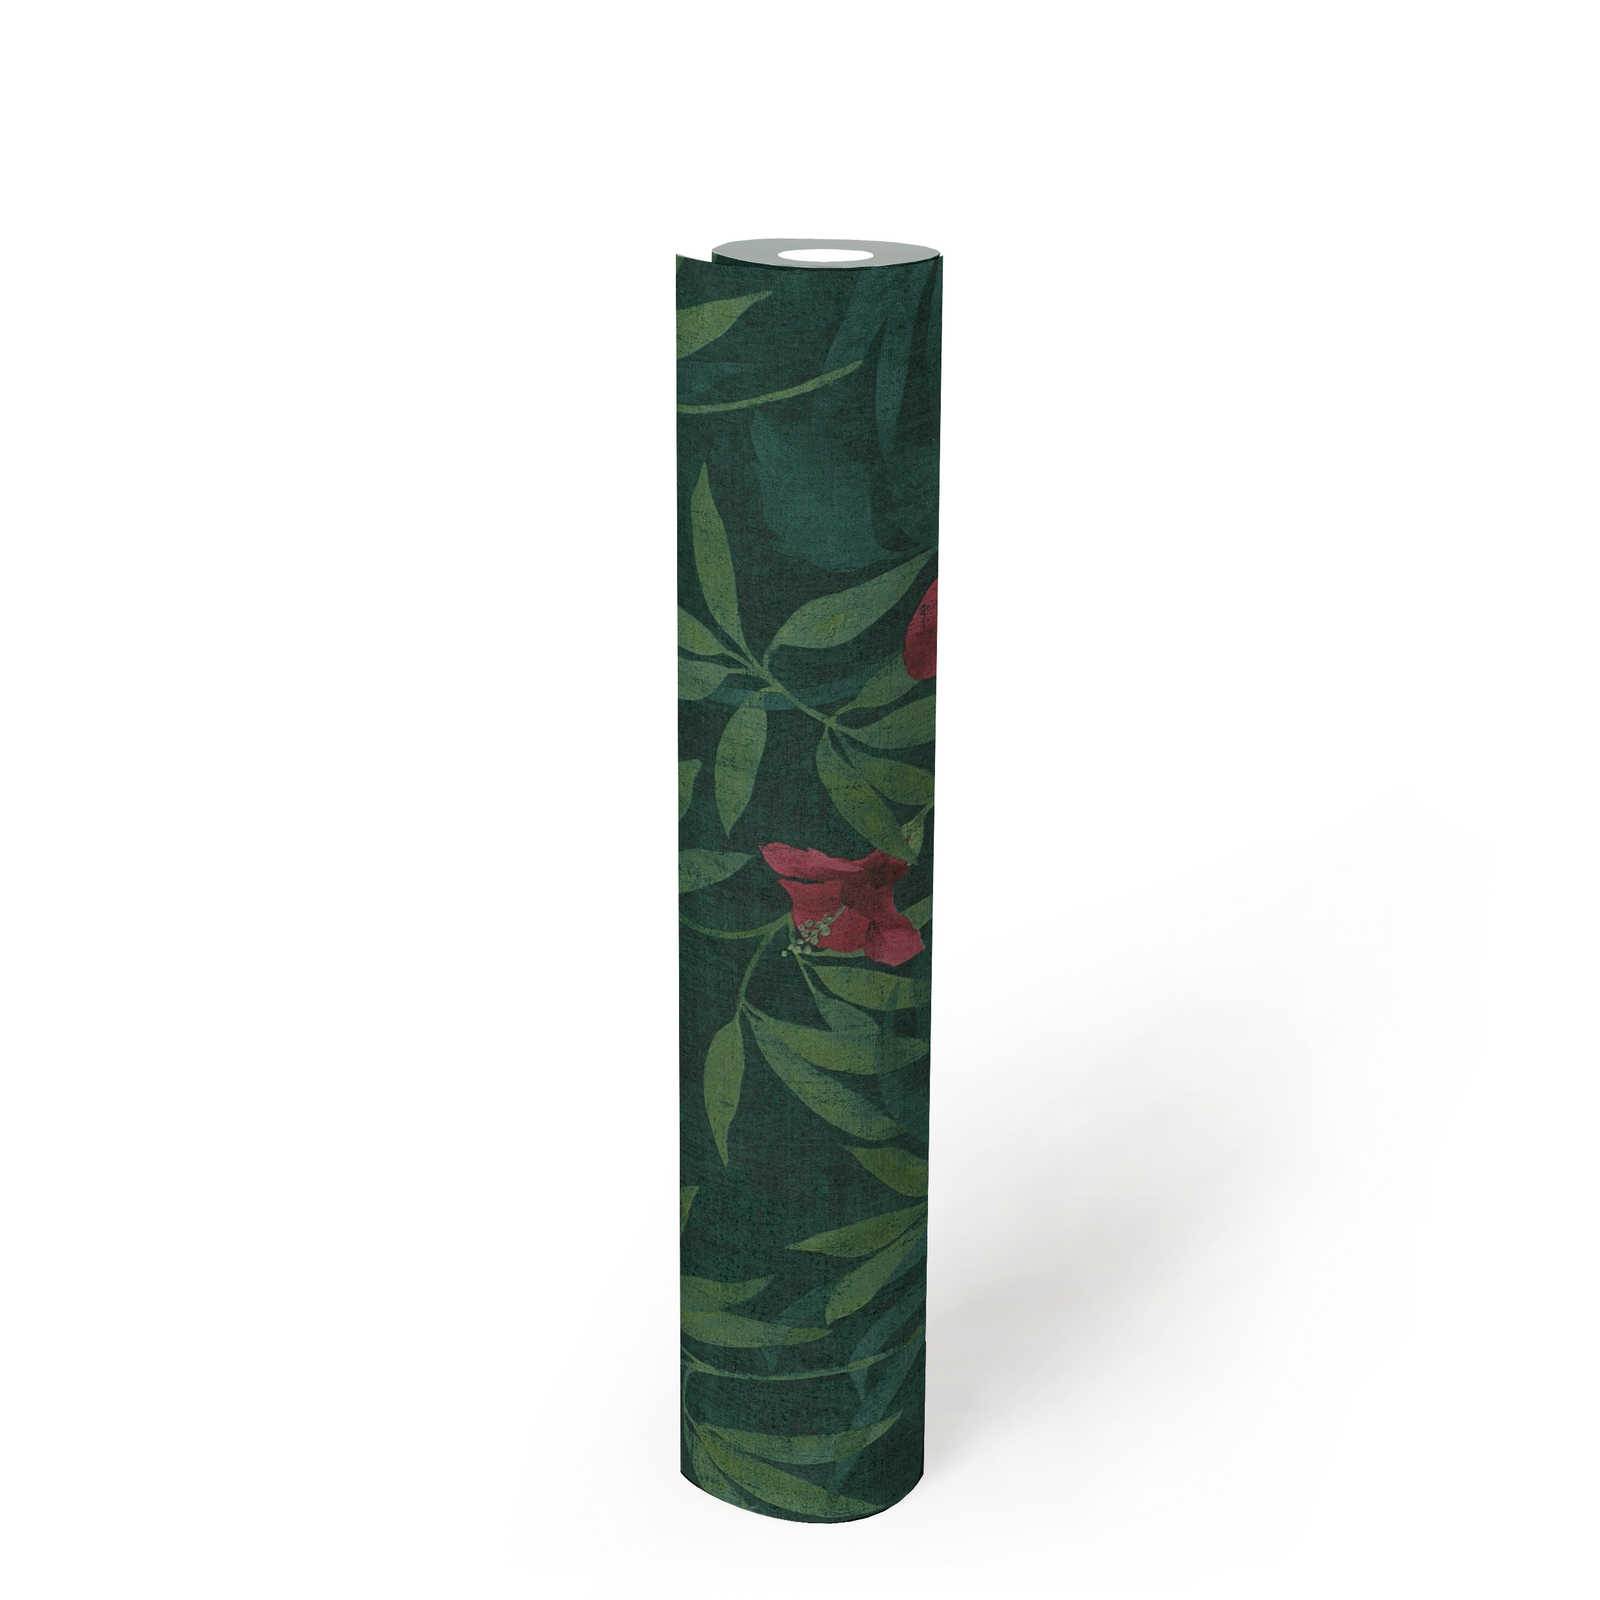             Jungle wallpaper green jungle & hibiscus flowers - green, red
        